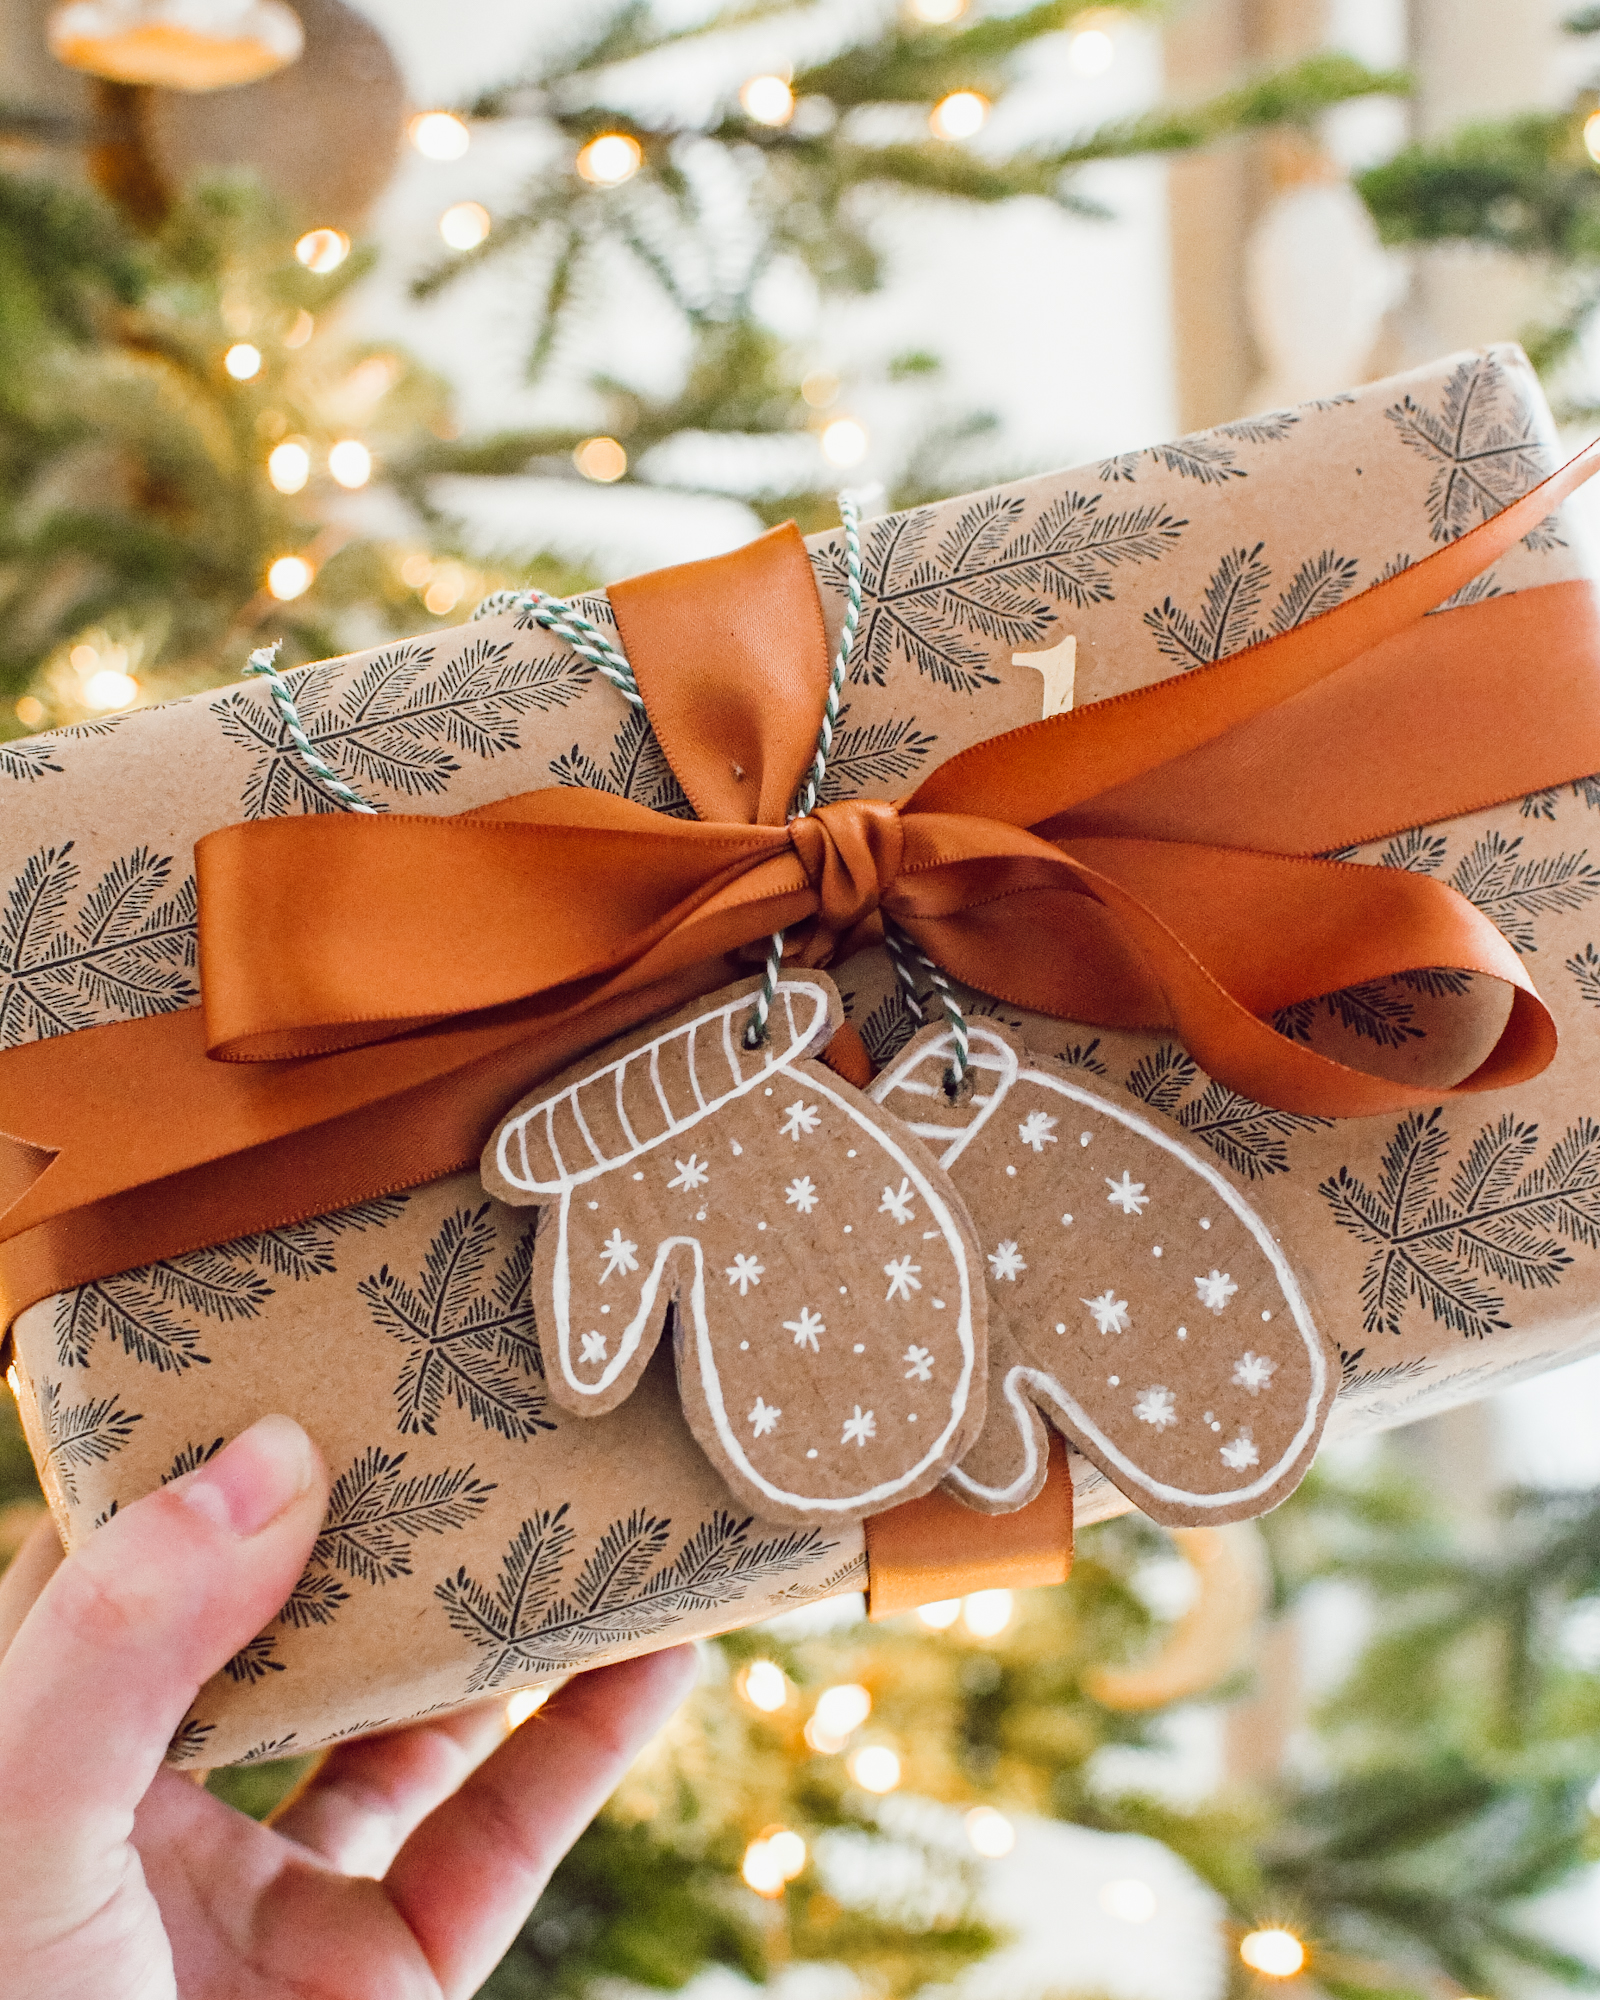 kerstcadeaus inpakken cadeaulabels maken van karton